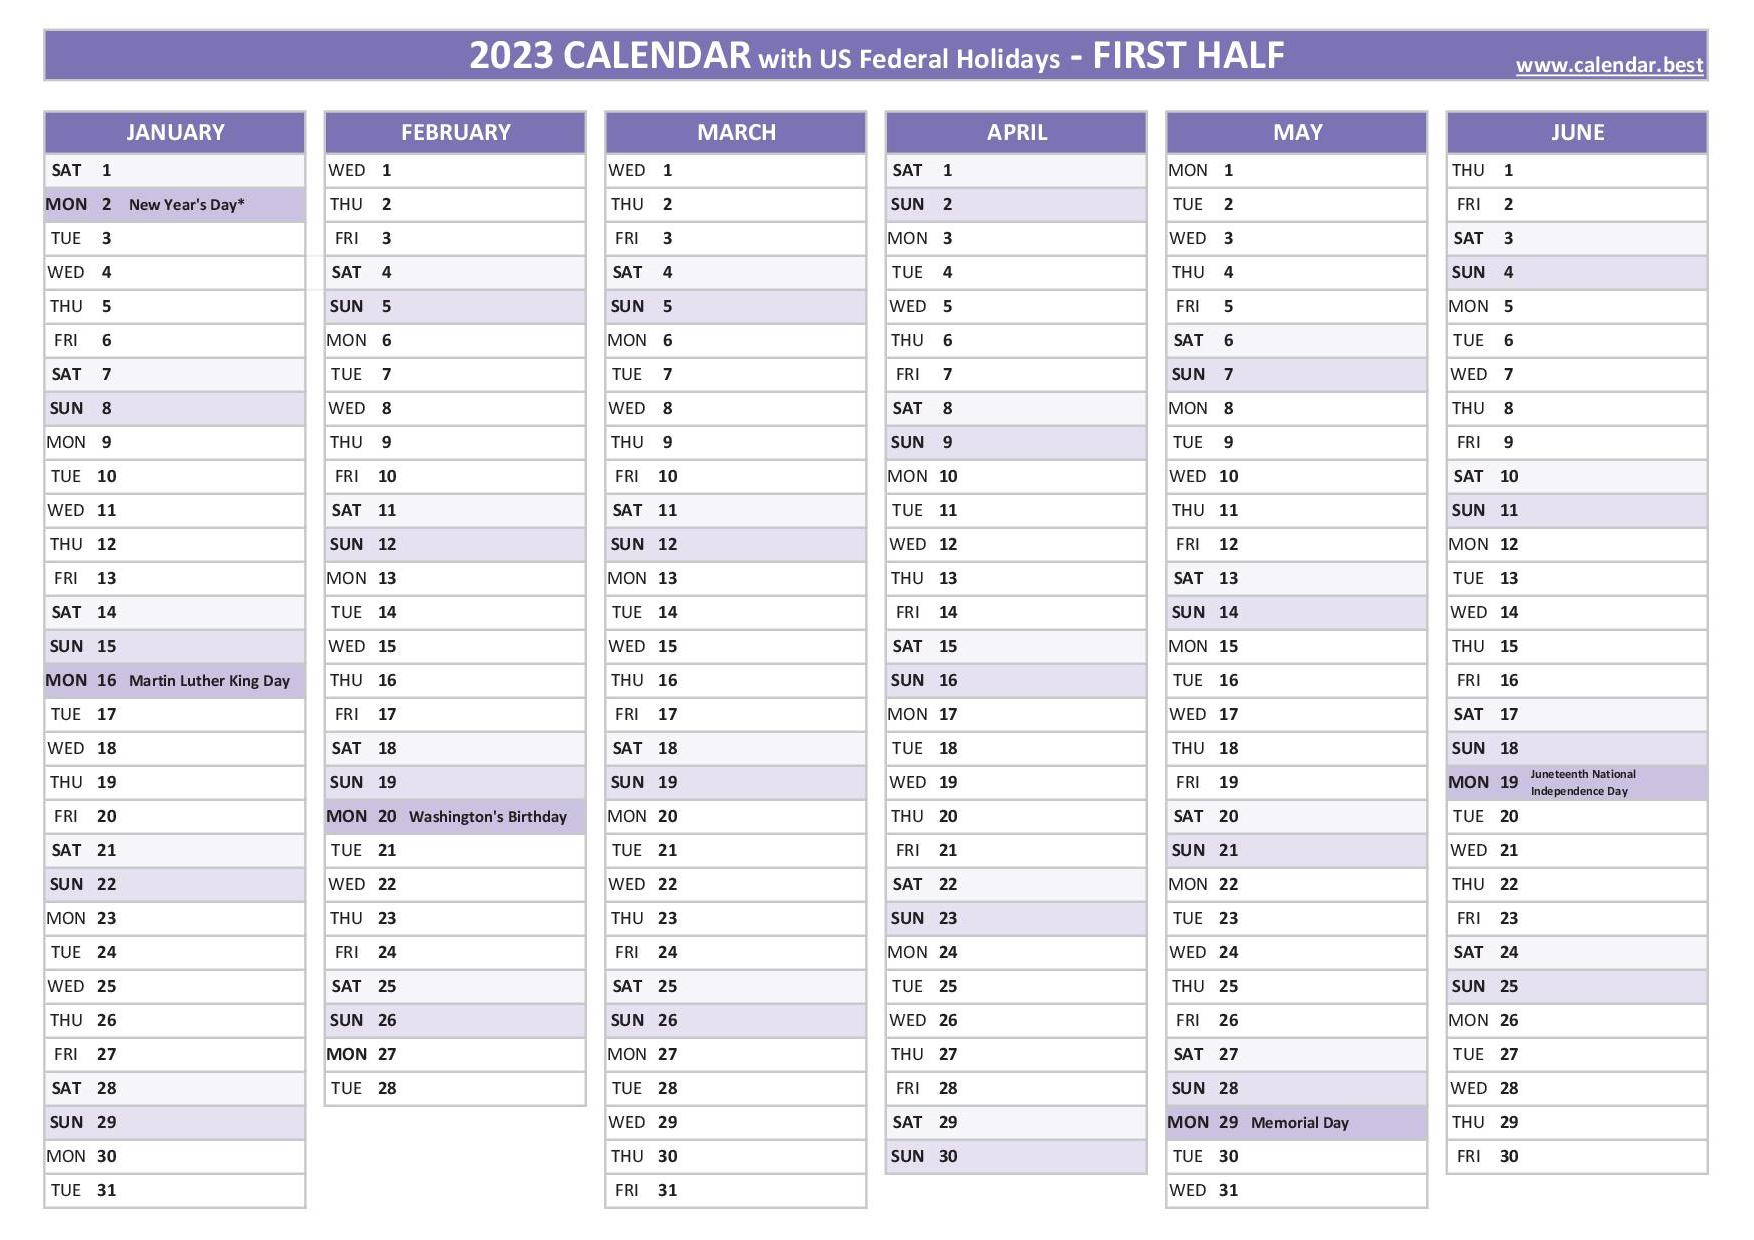 First half year calendar 2023 with holidays